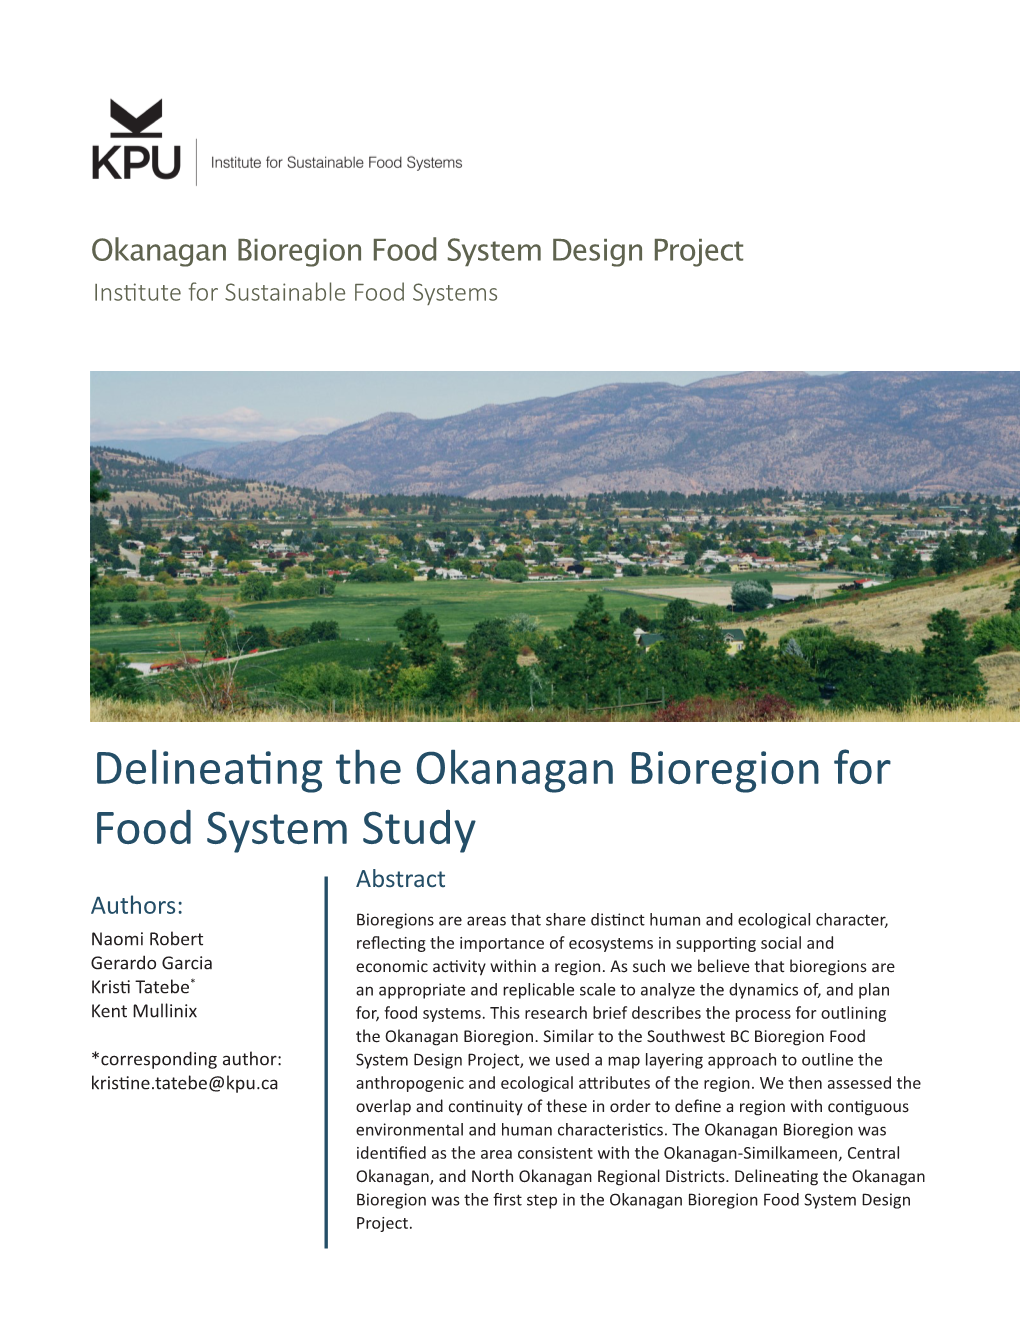 Delineating the Okanagan Bioregion for Food